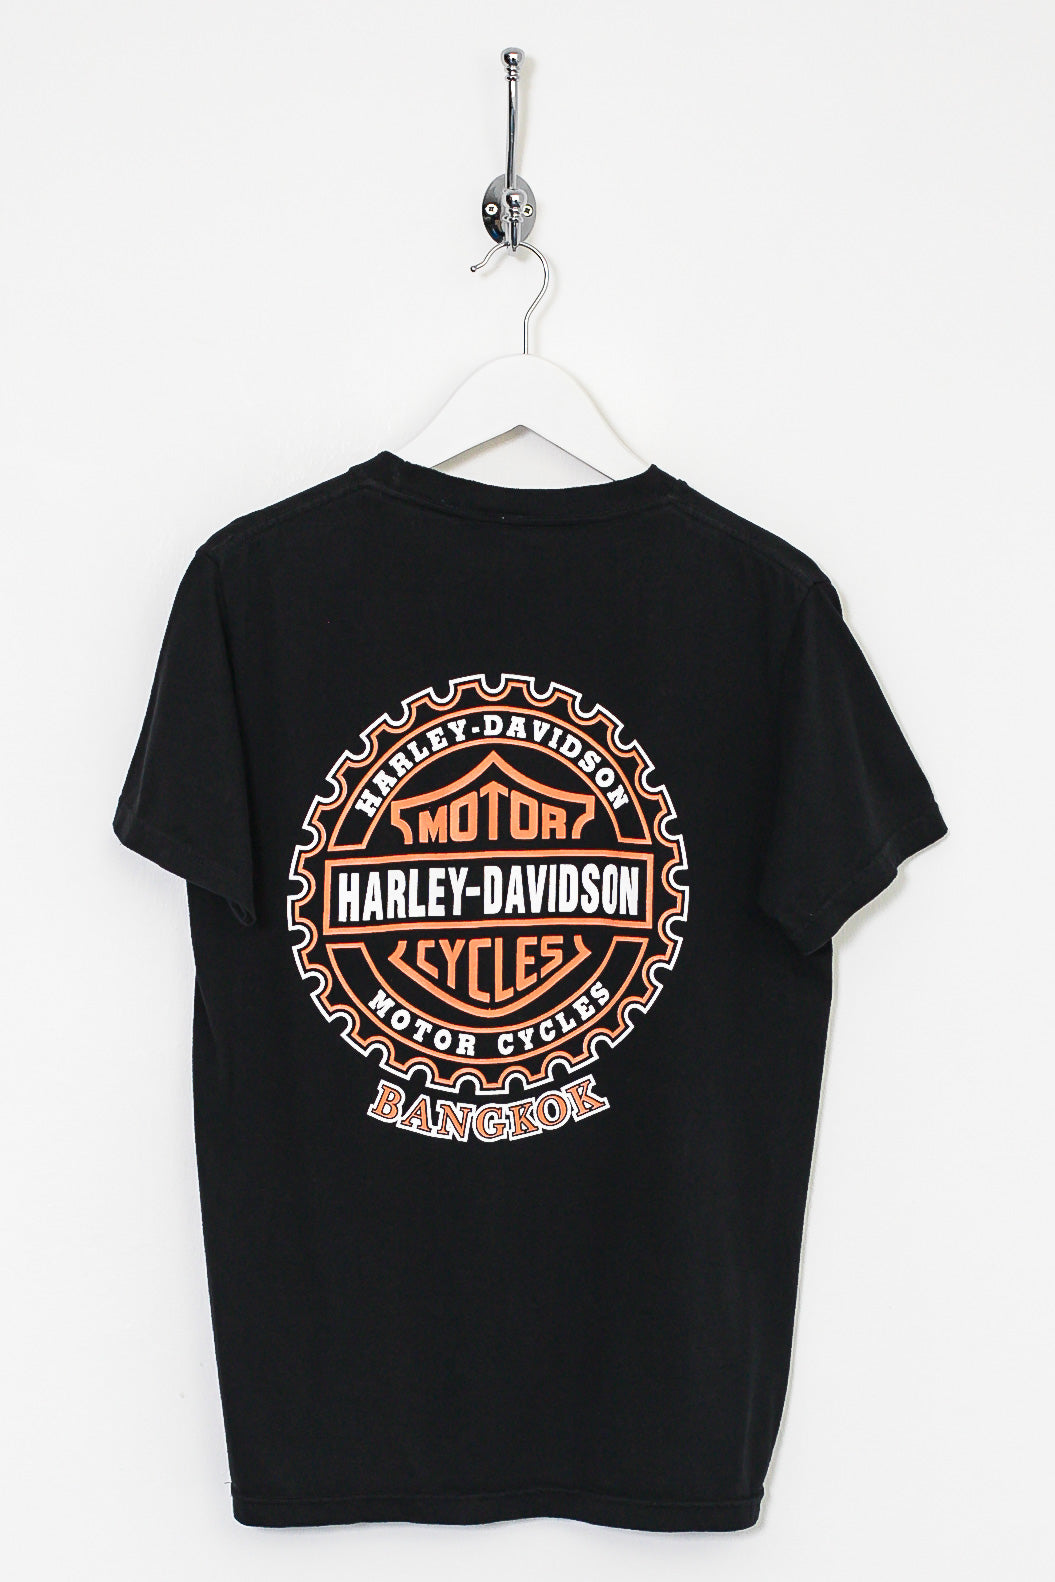 Harley Davidson Tee (S)